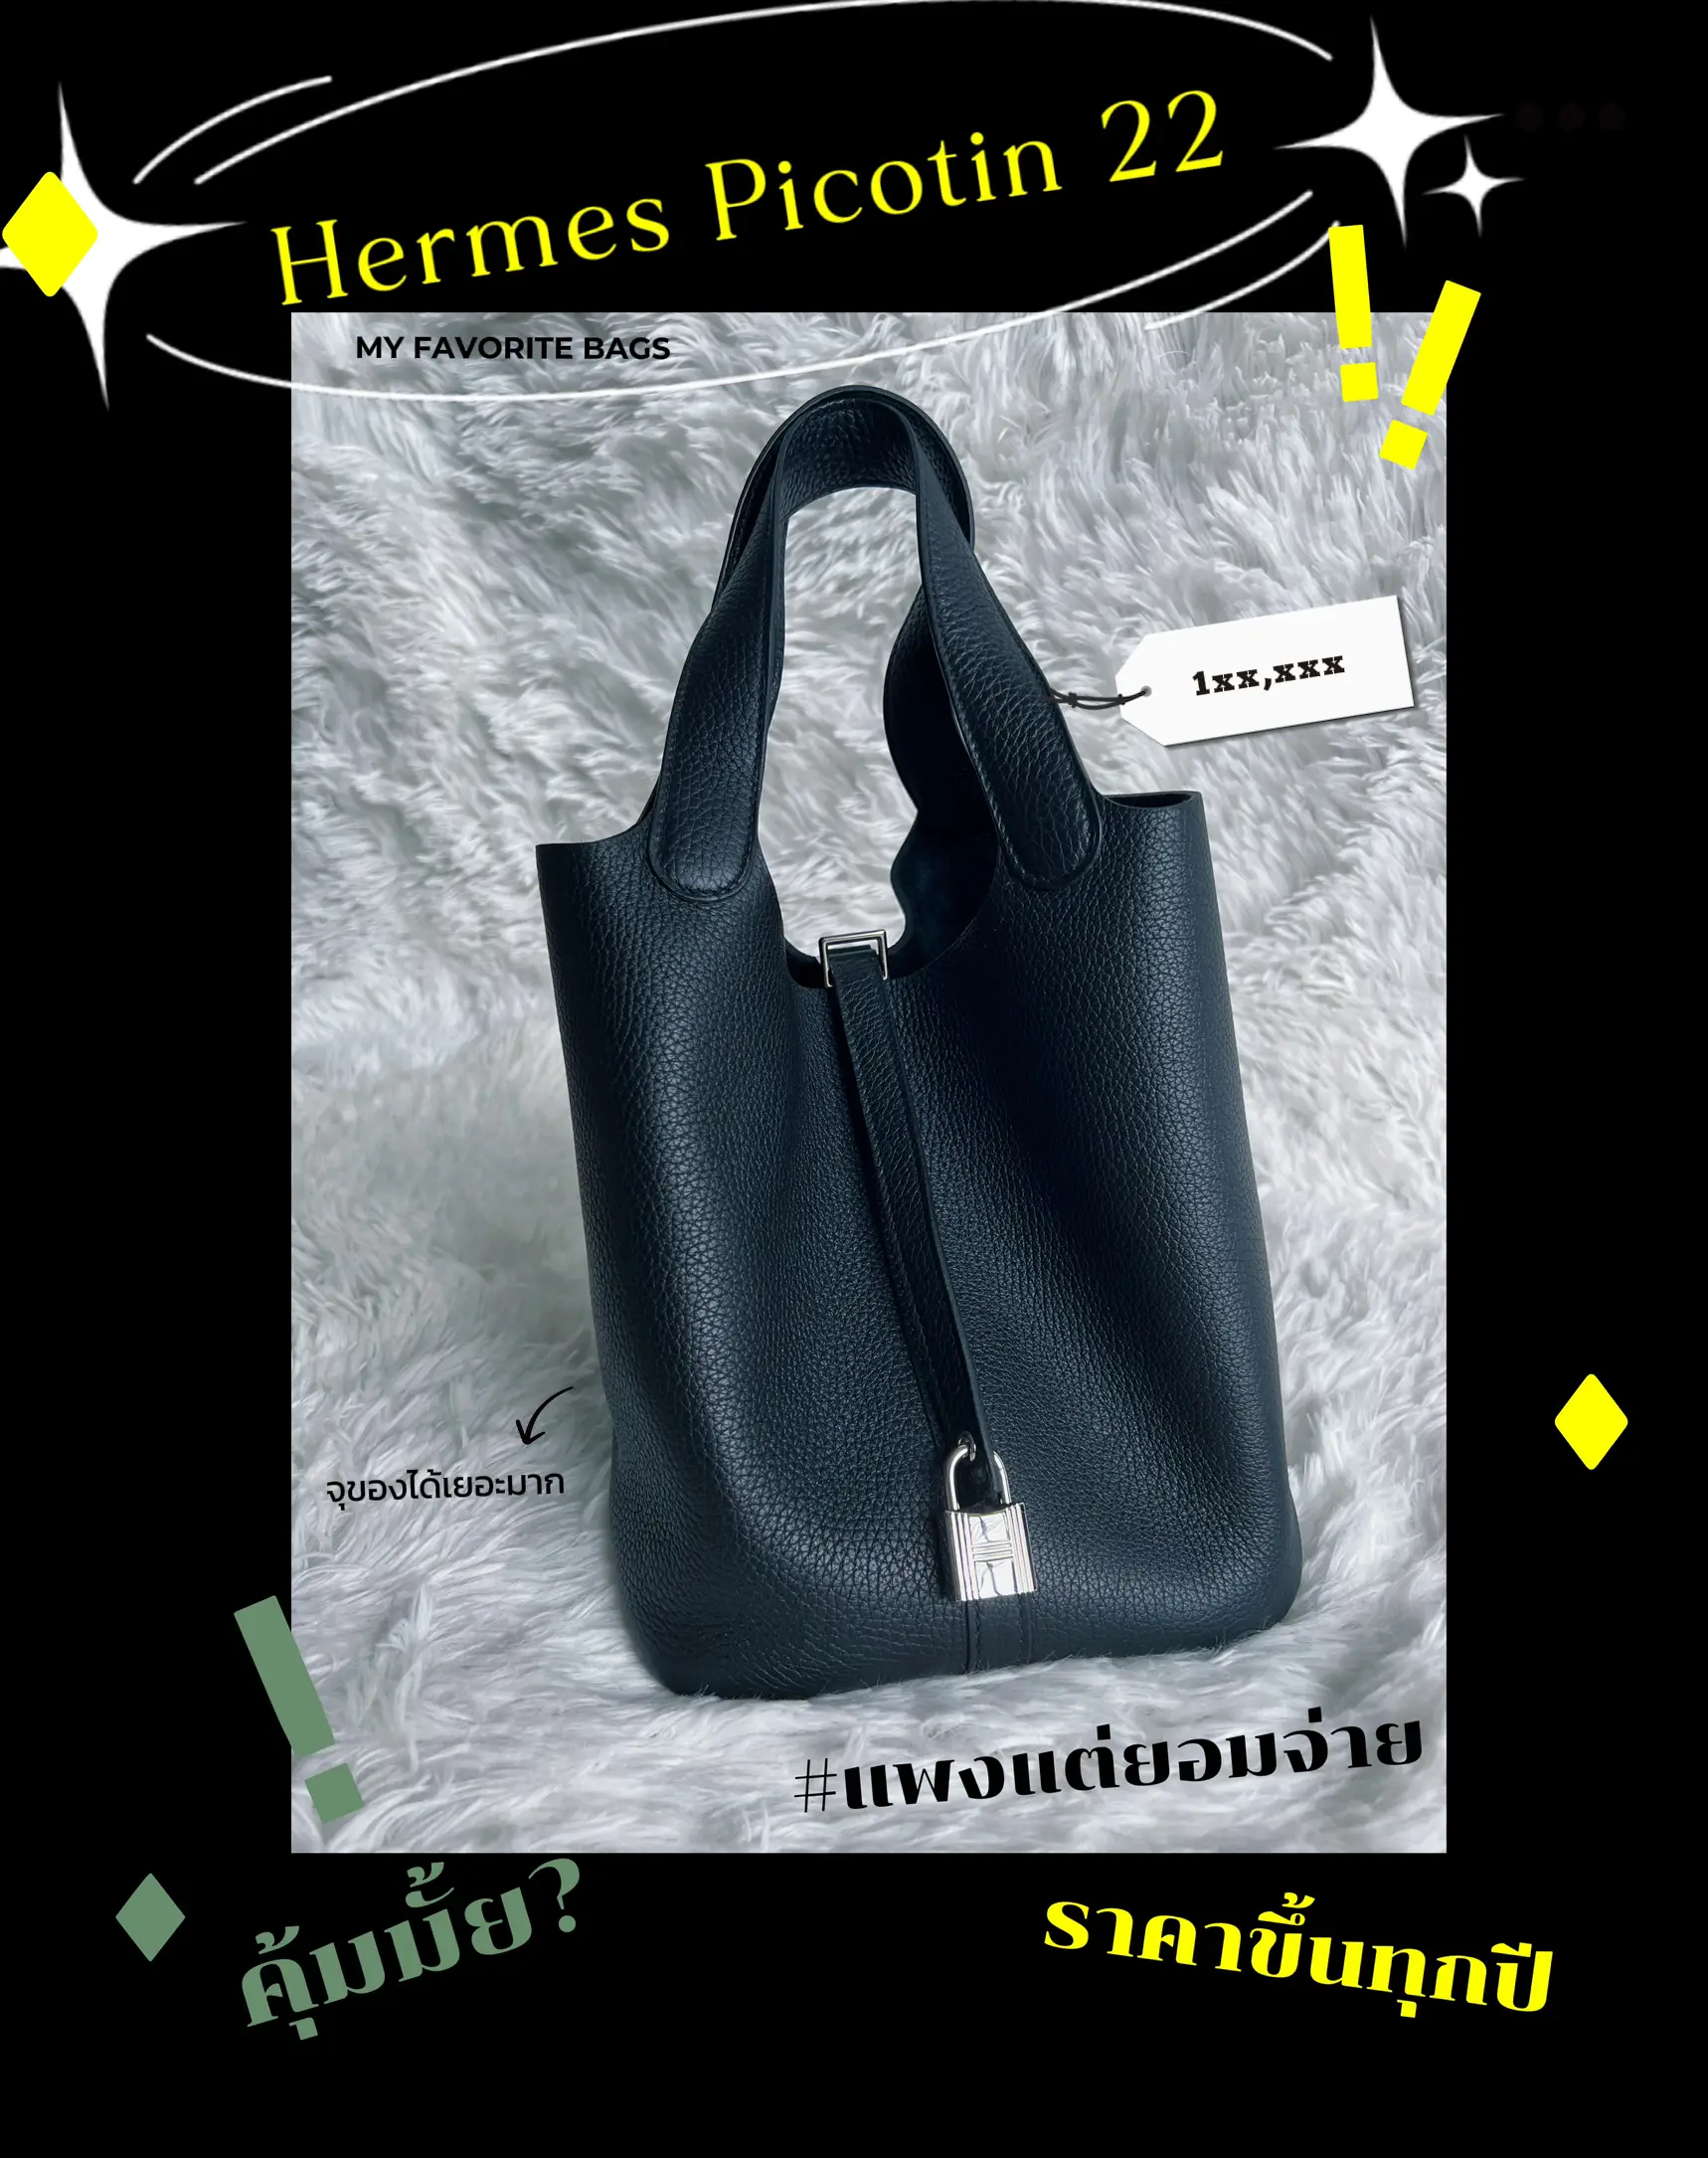 4 Reasons To Love Your Hermes Picotin Bag 